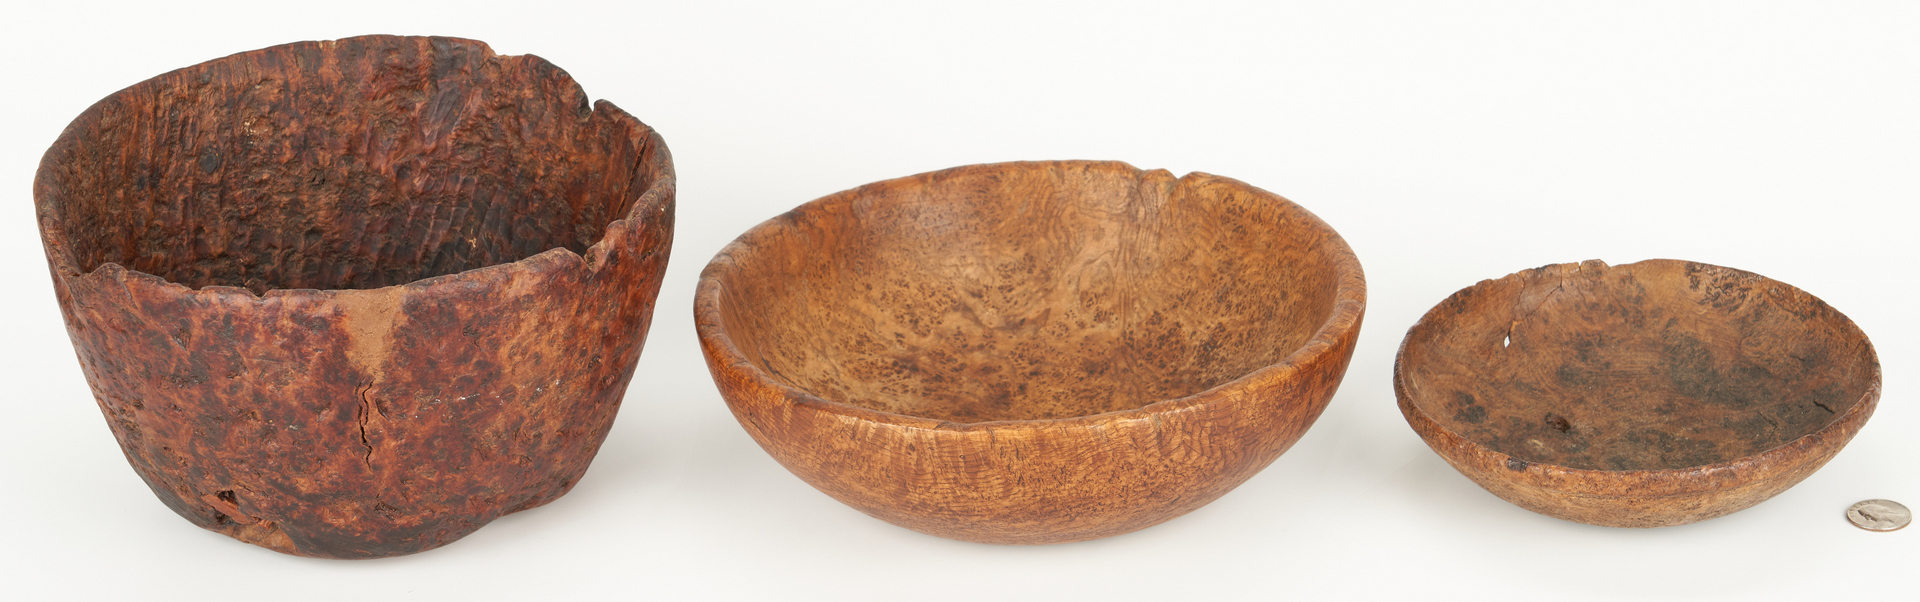 Lot 181: 3 American Burl Wood Bowls, 19th century or earlier